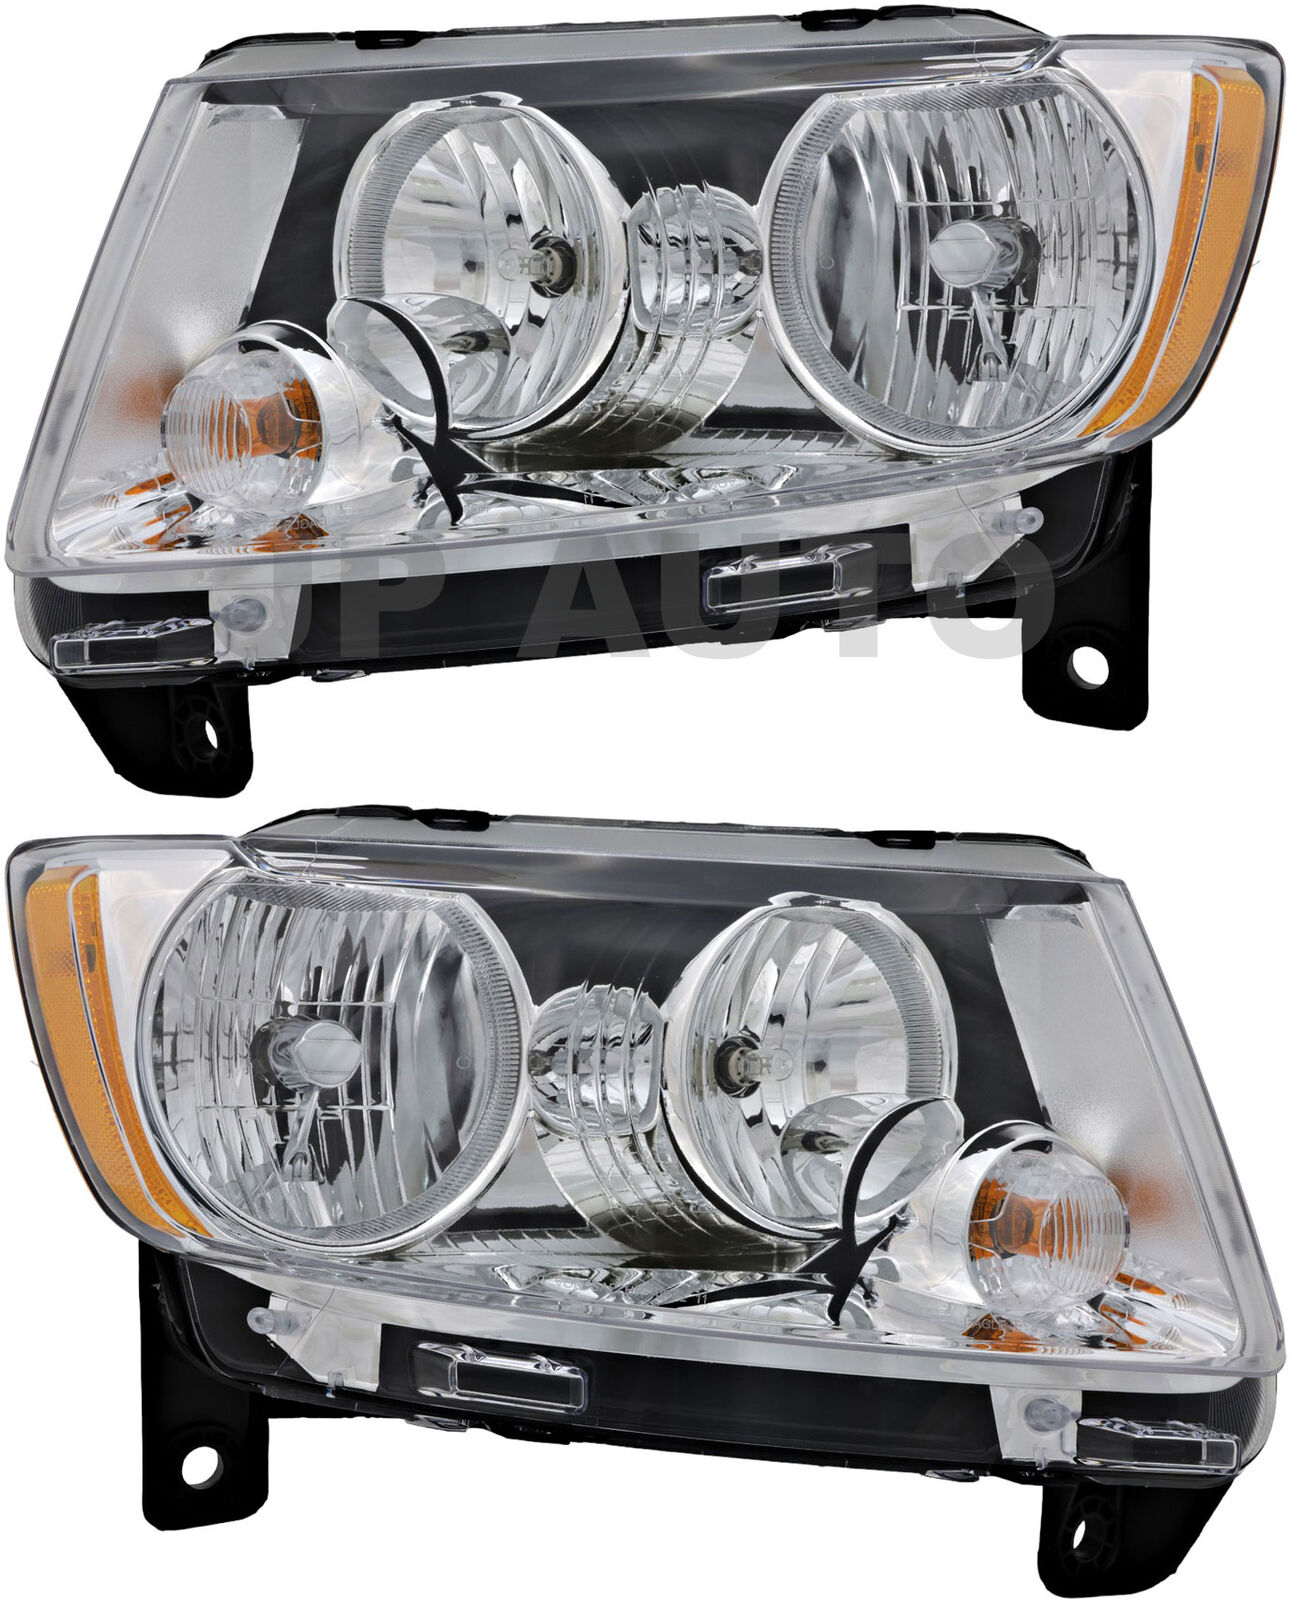 For 2011-2013 Jeep Grand Cherokee Headlight Halogen Set Pair